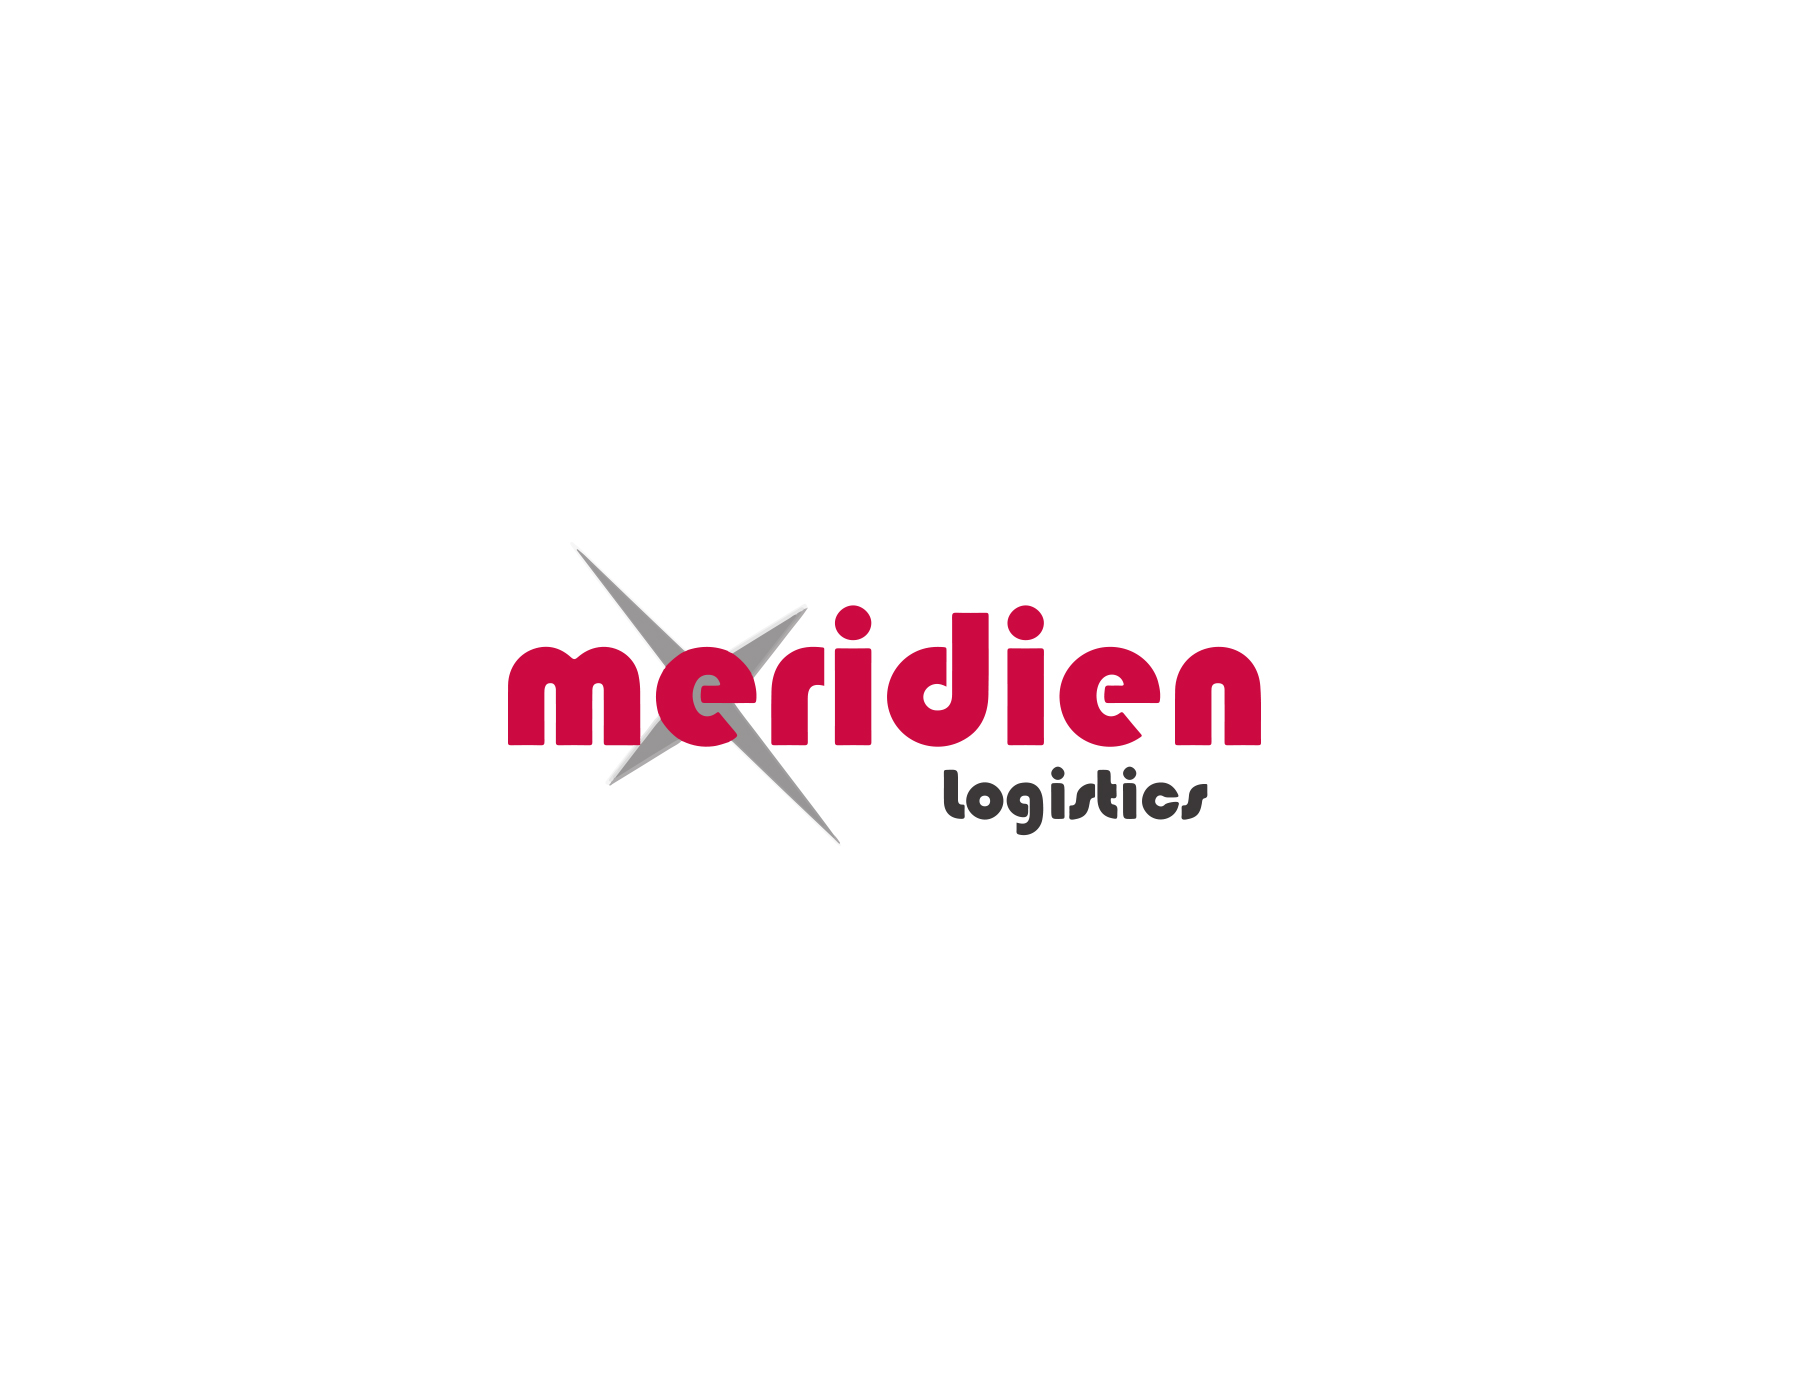 Freight Forwarder by Meridien Log